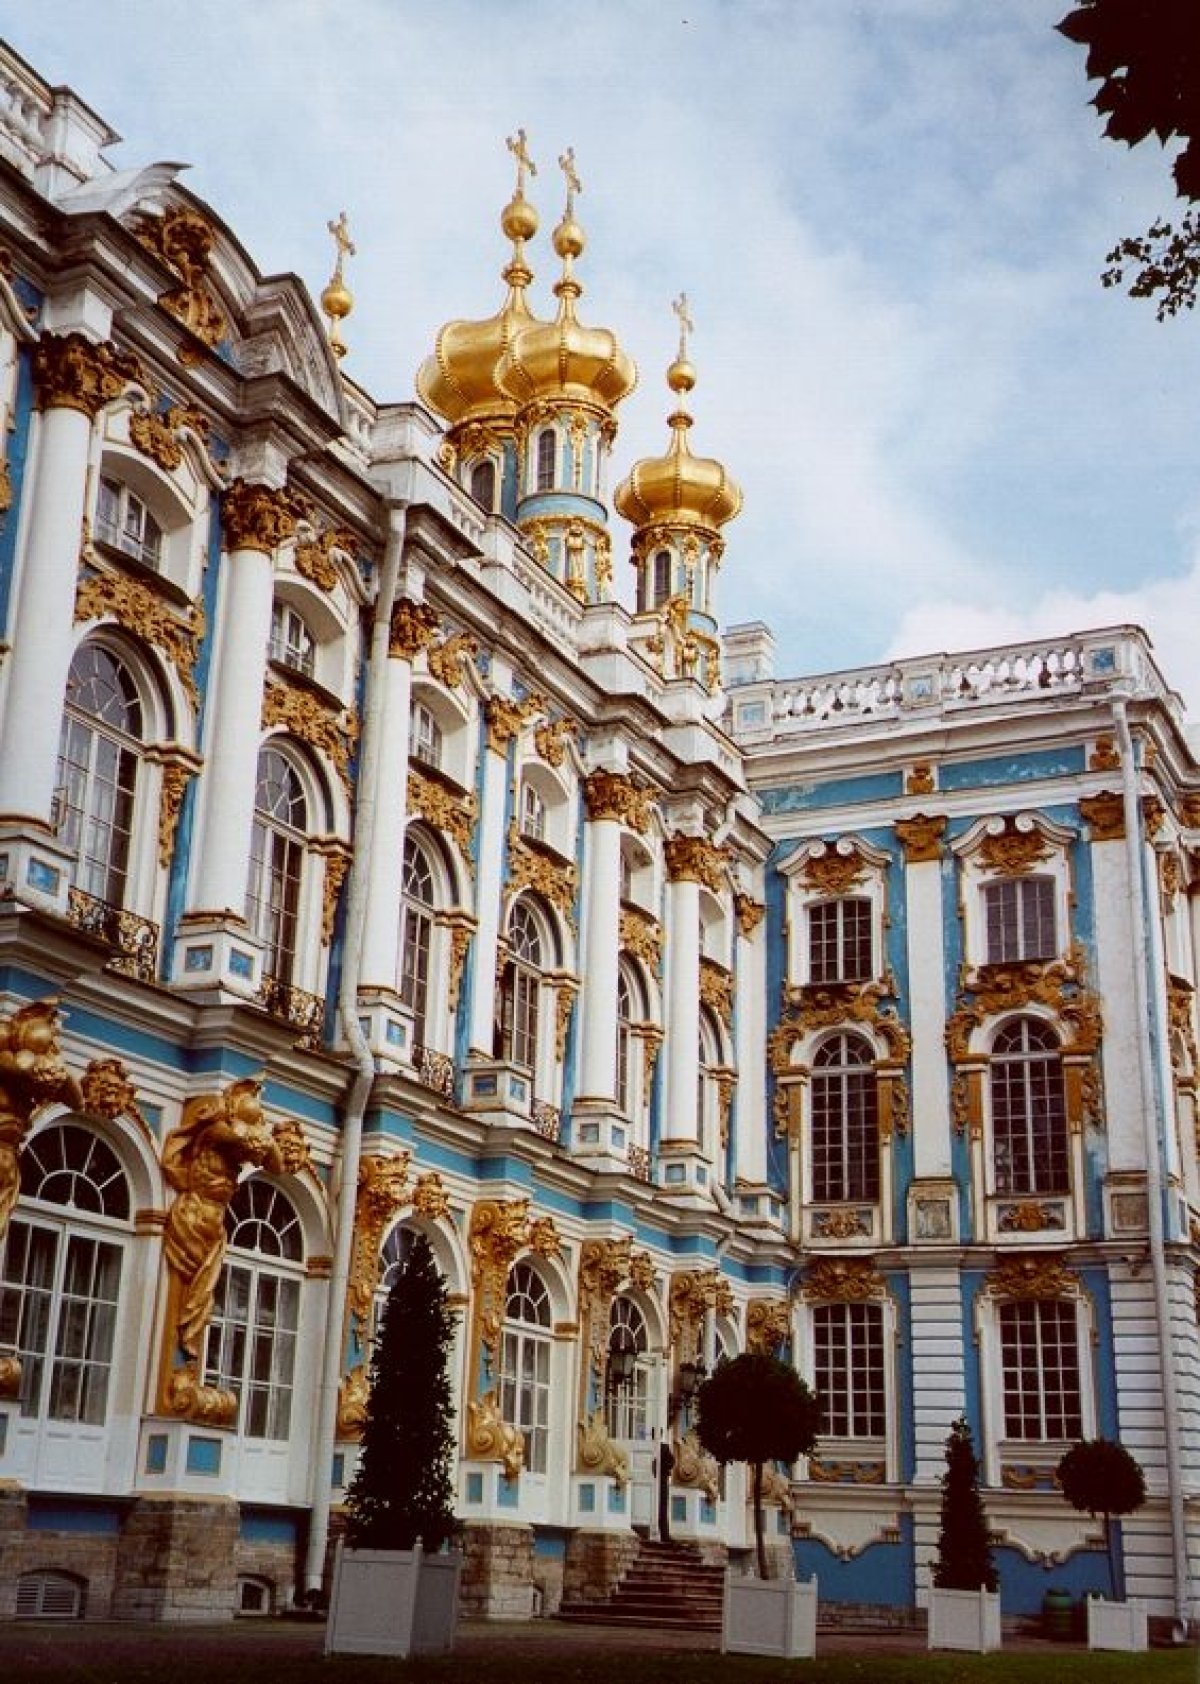 St. Petersburg - palace exterior vertical